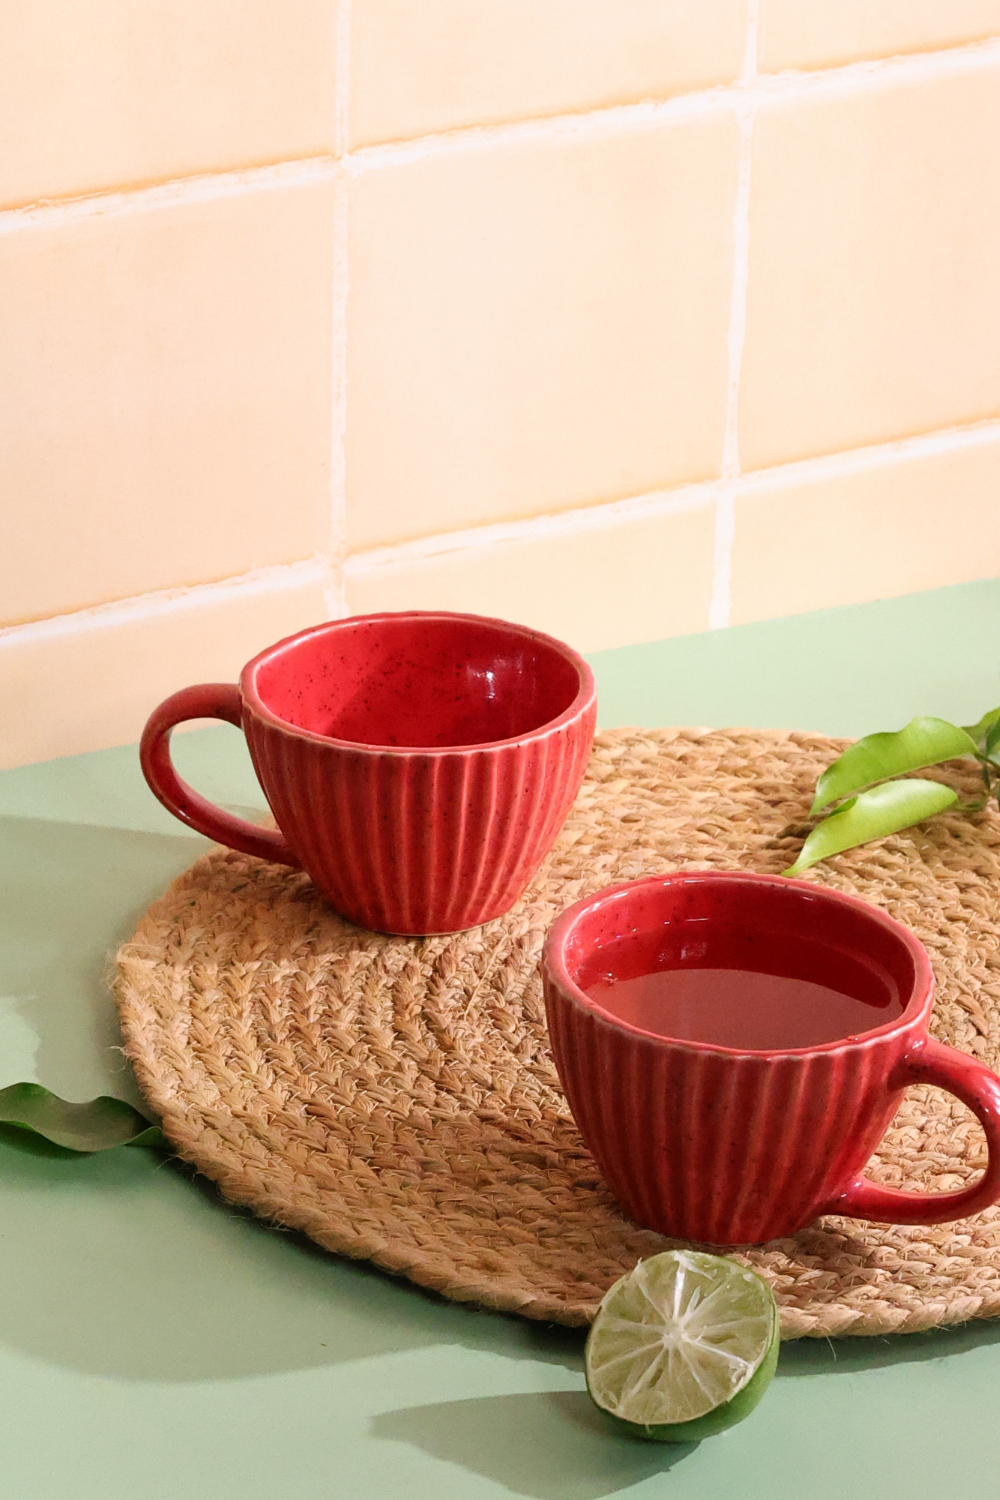 Handmade ceramic coffee mugs